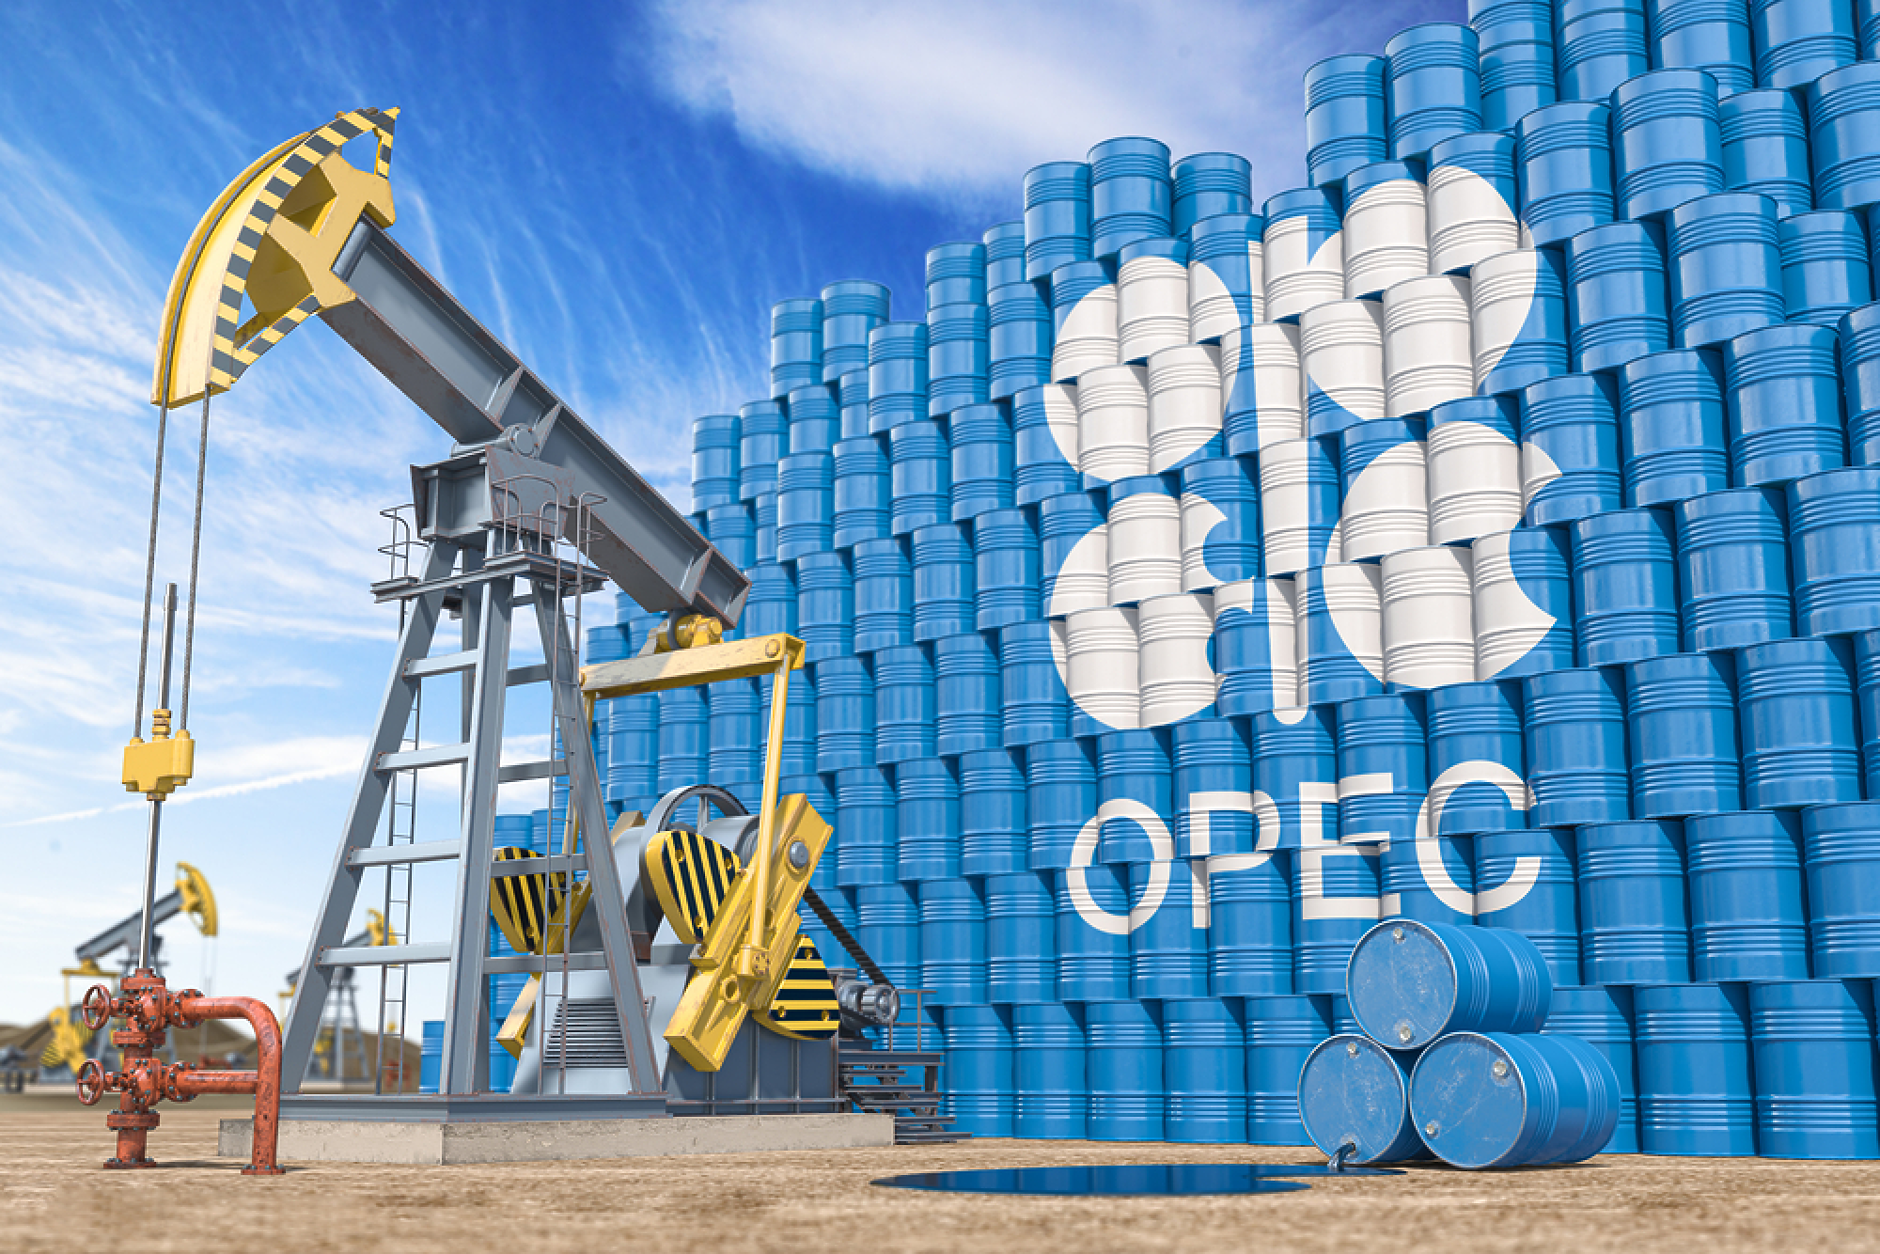 87,52 долара за барел петрол на ОПЕК